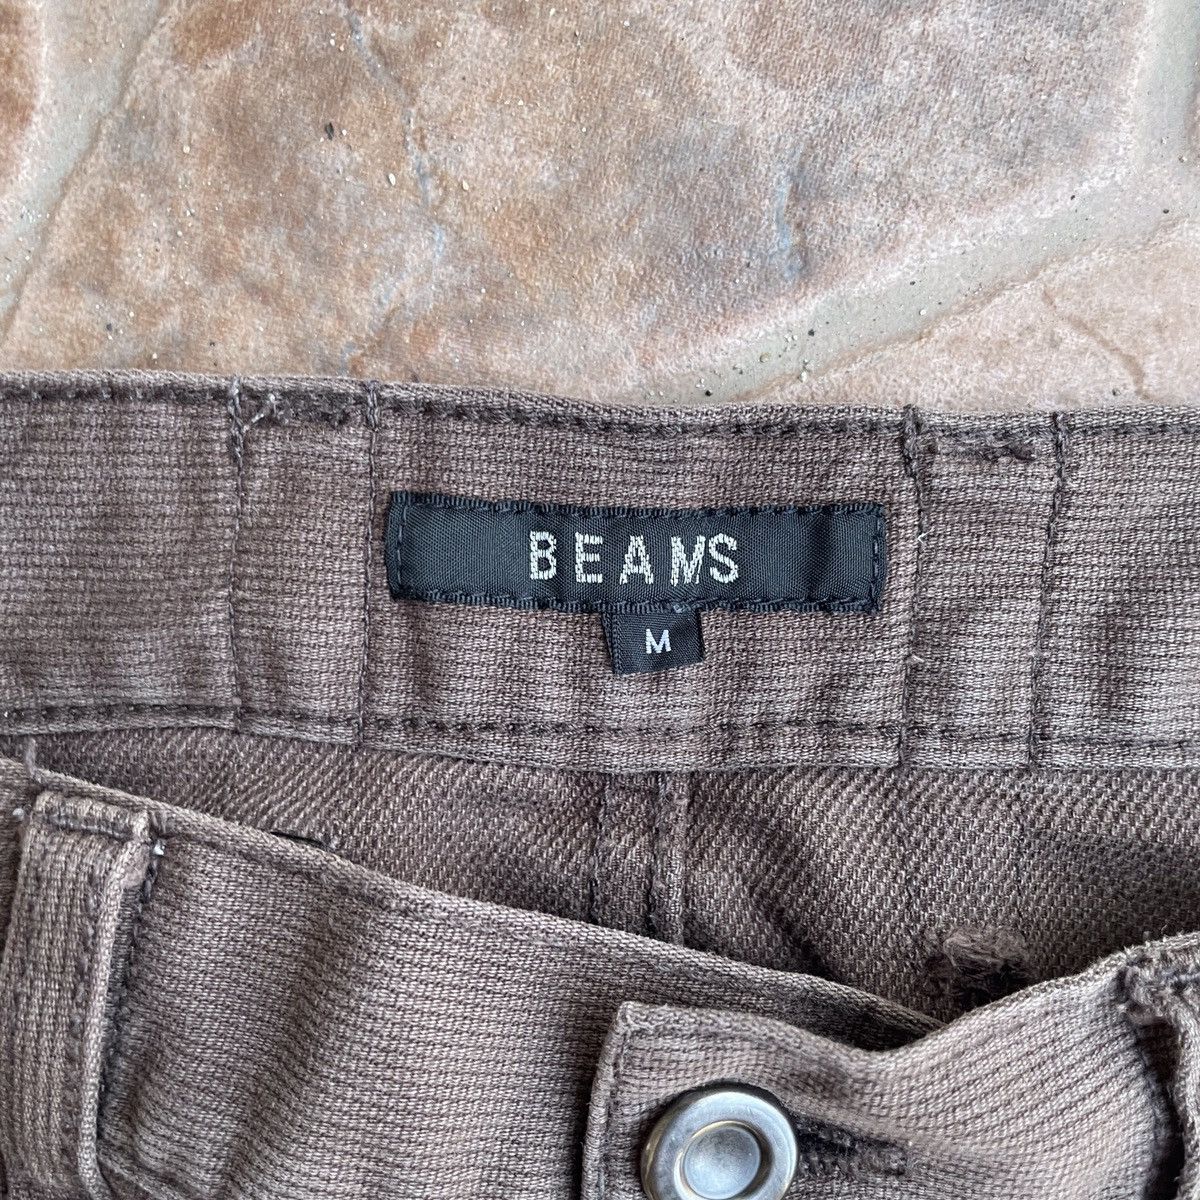 Beams Plus Vintage Beams Corduroy Distressed Casual Pants Size US 32 / EU 48 - 5 Thumbnail